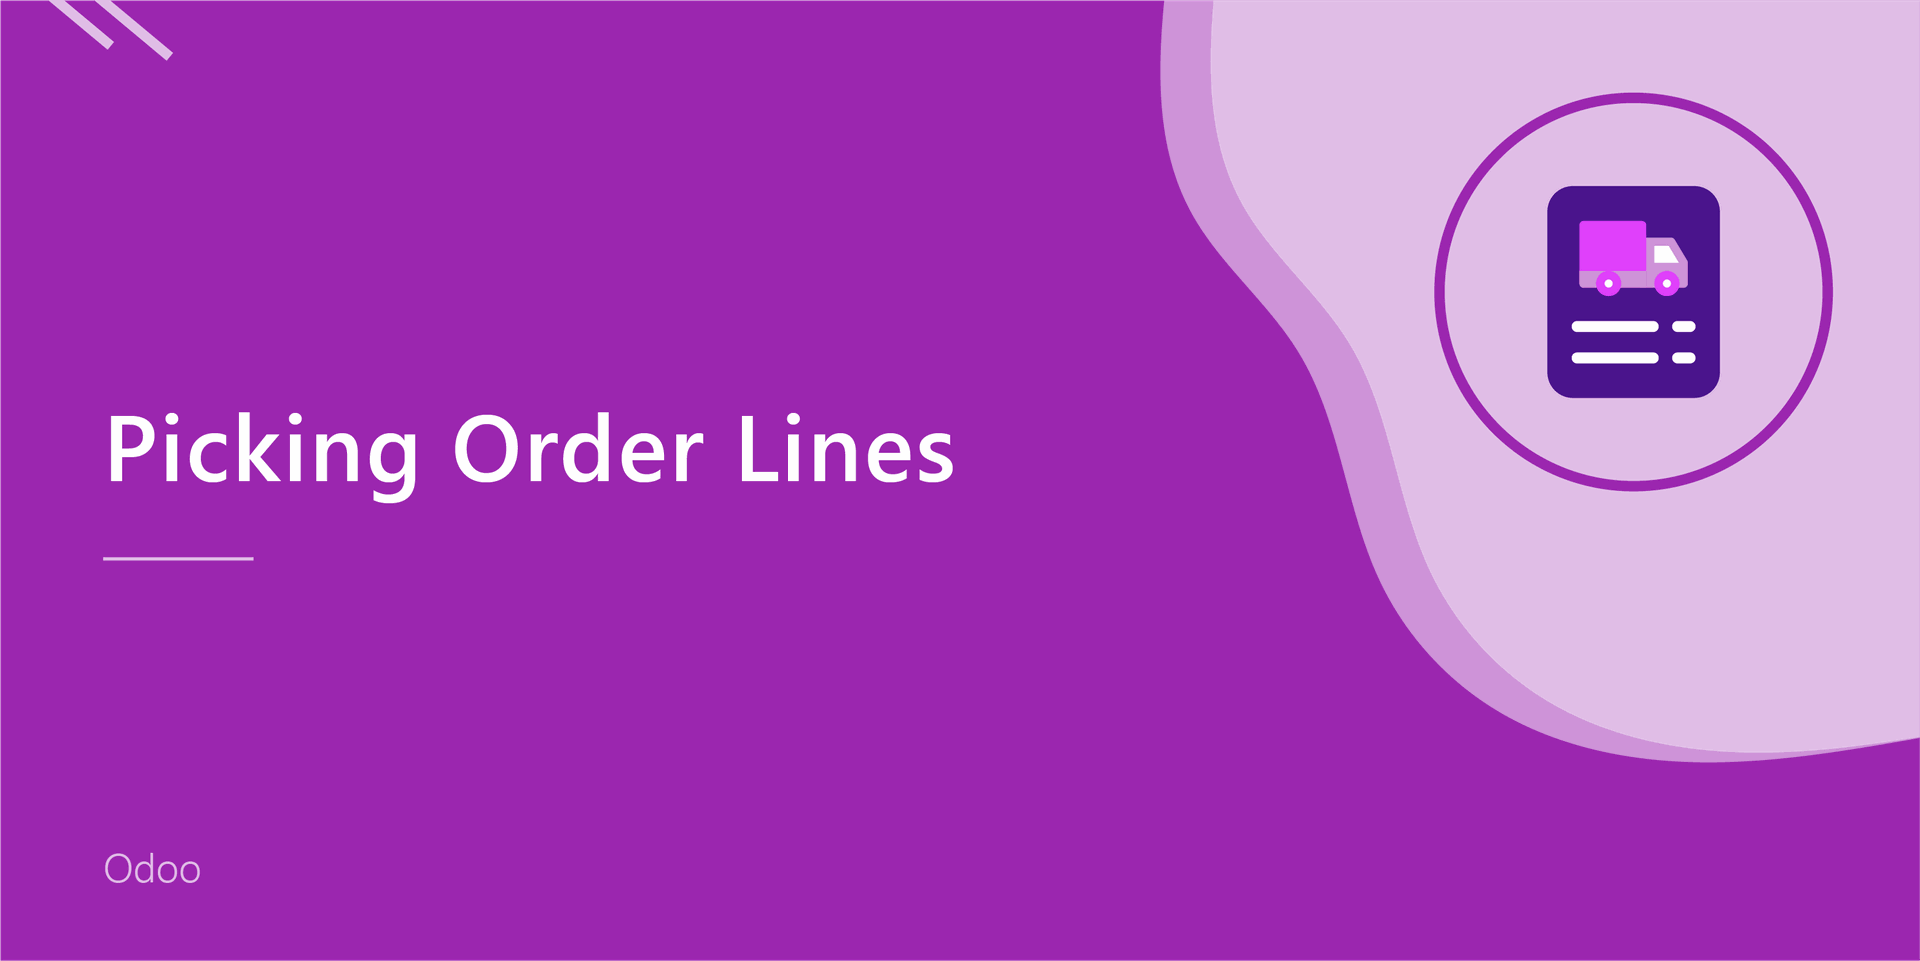 Picking Order Lines
